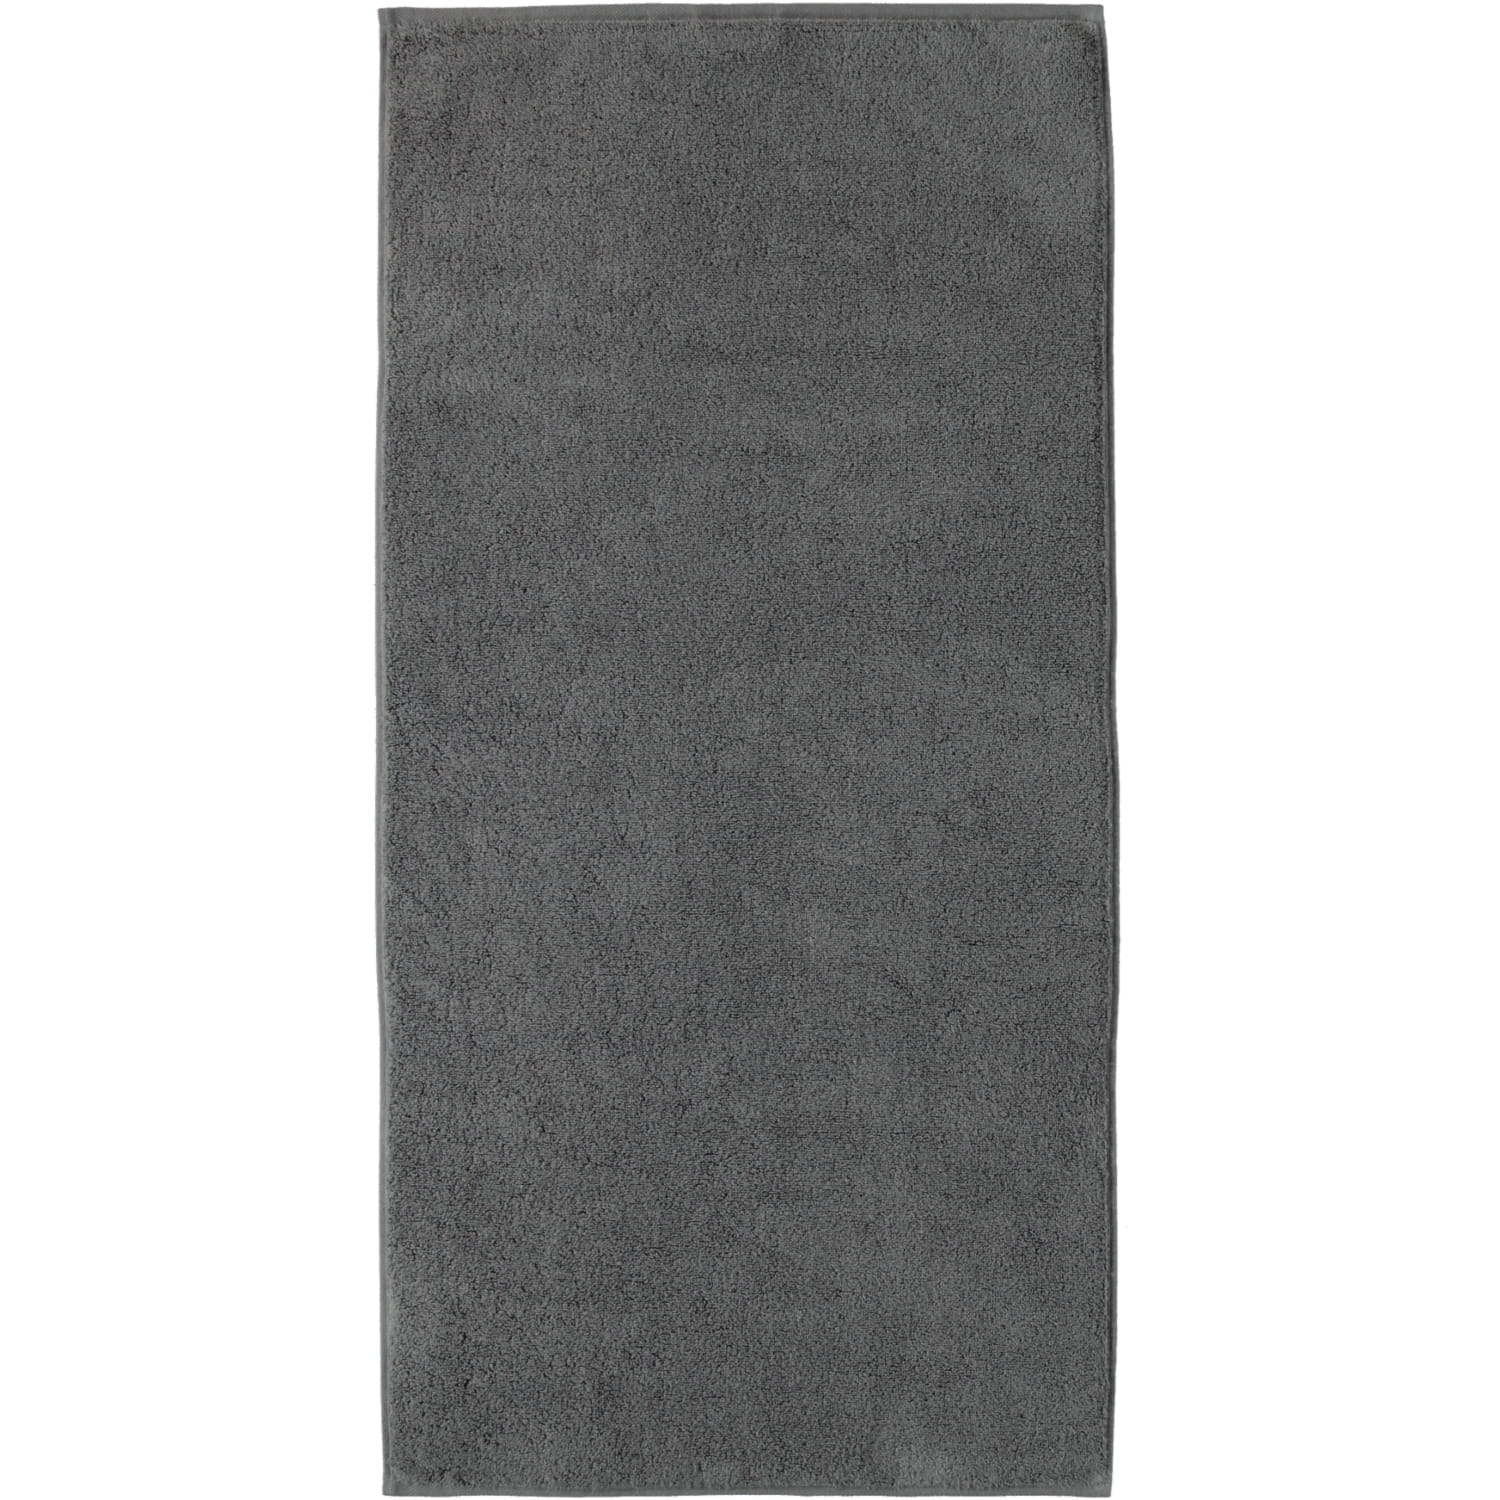 Ross Sensual Skin 9000 - Farbe: anthrazit - 86 Handtuch 50x100 cm | Handtuch  | Handtücher